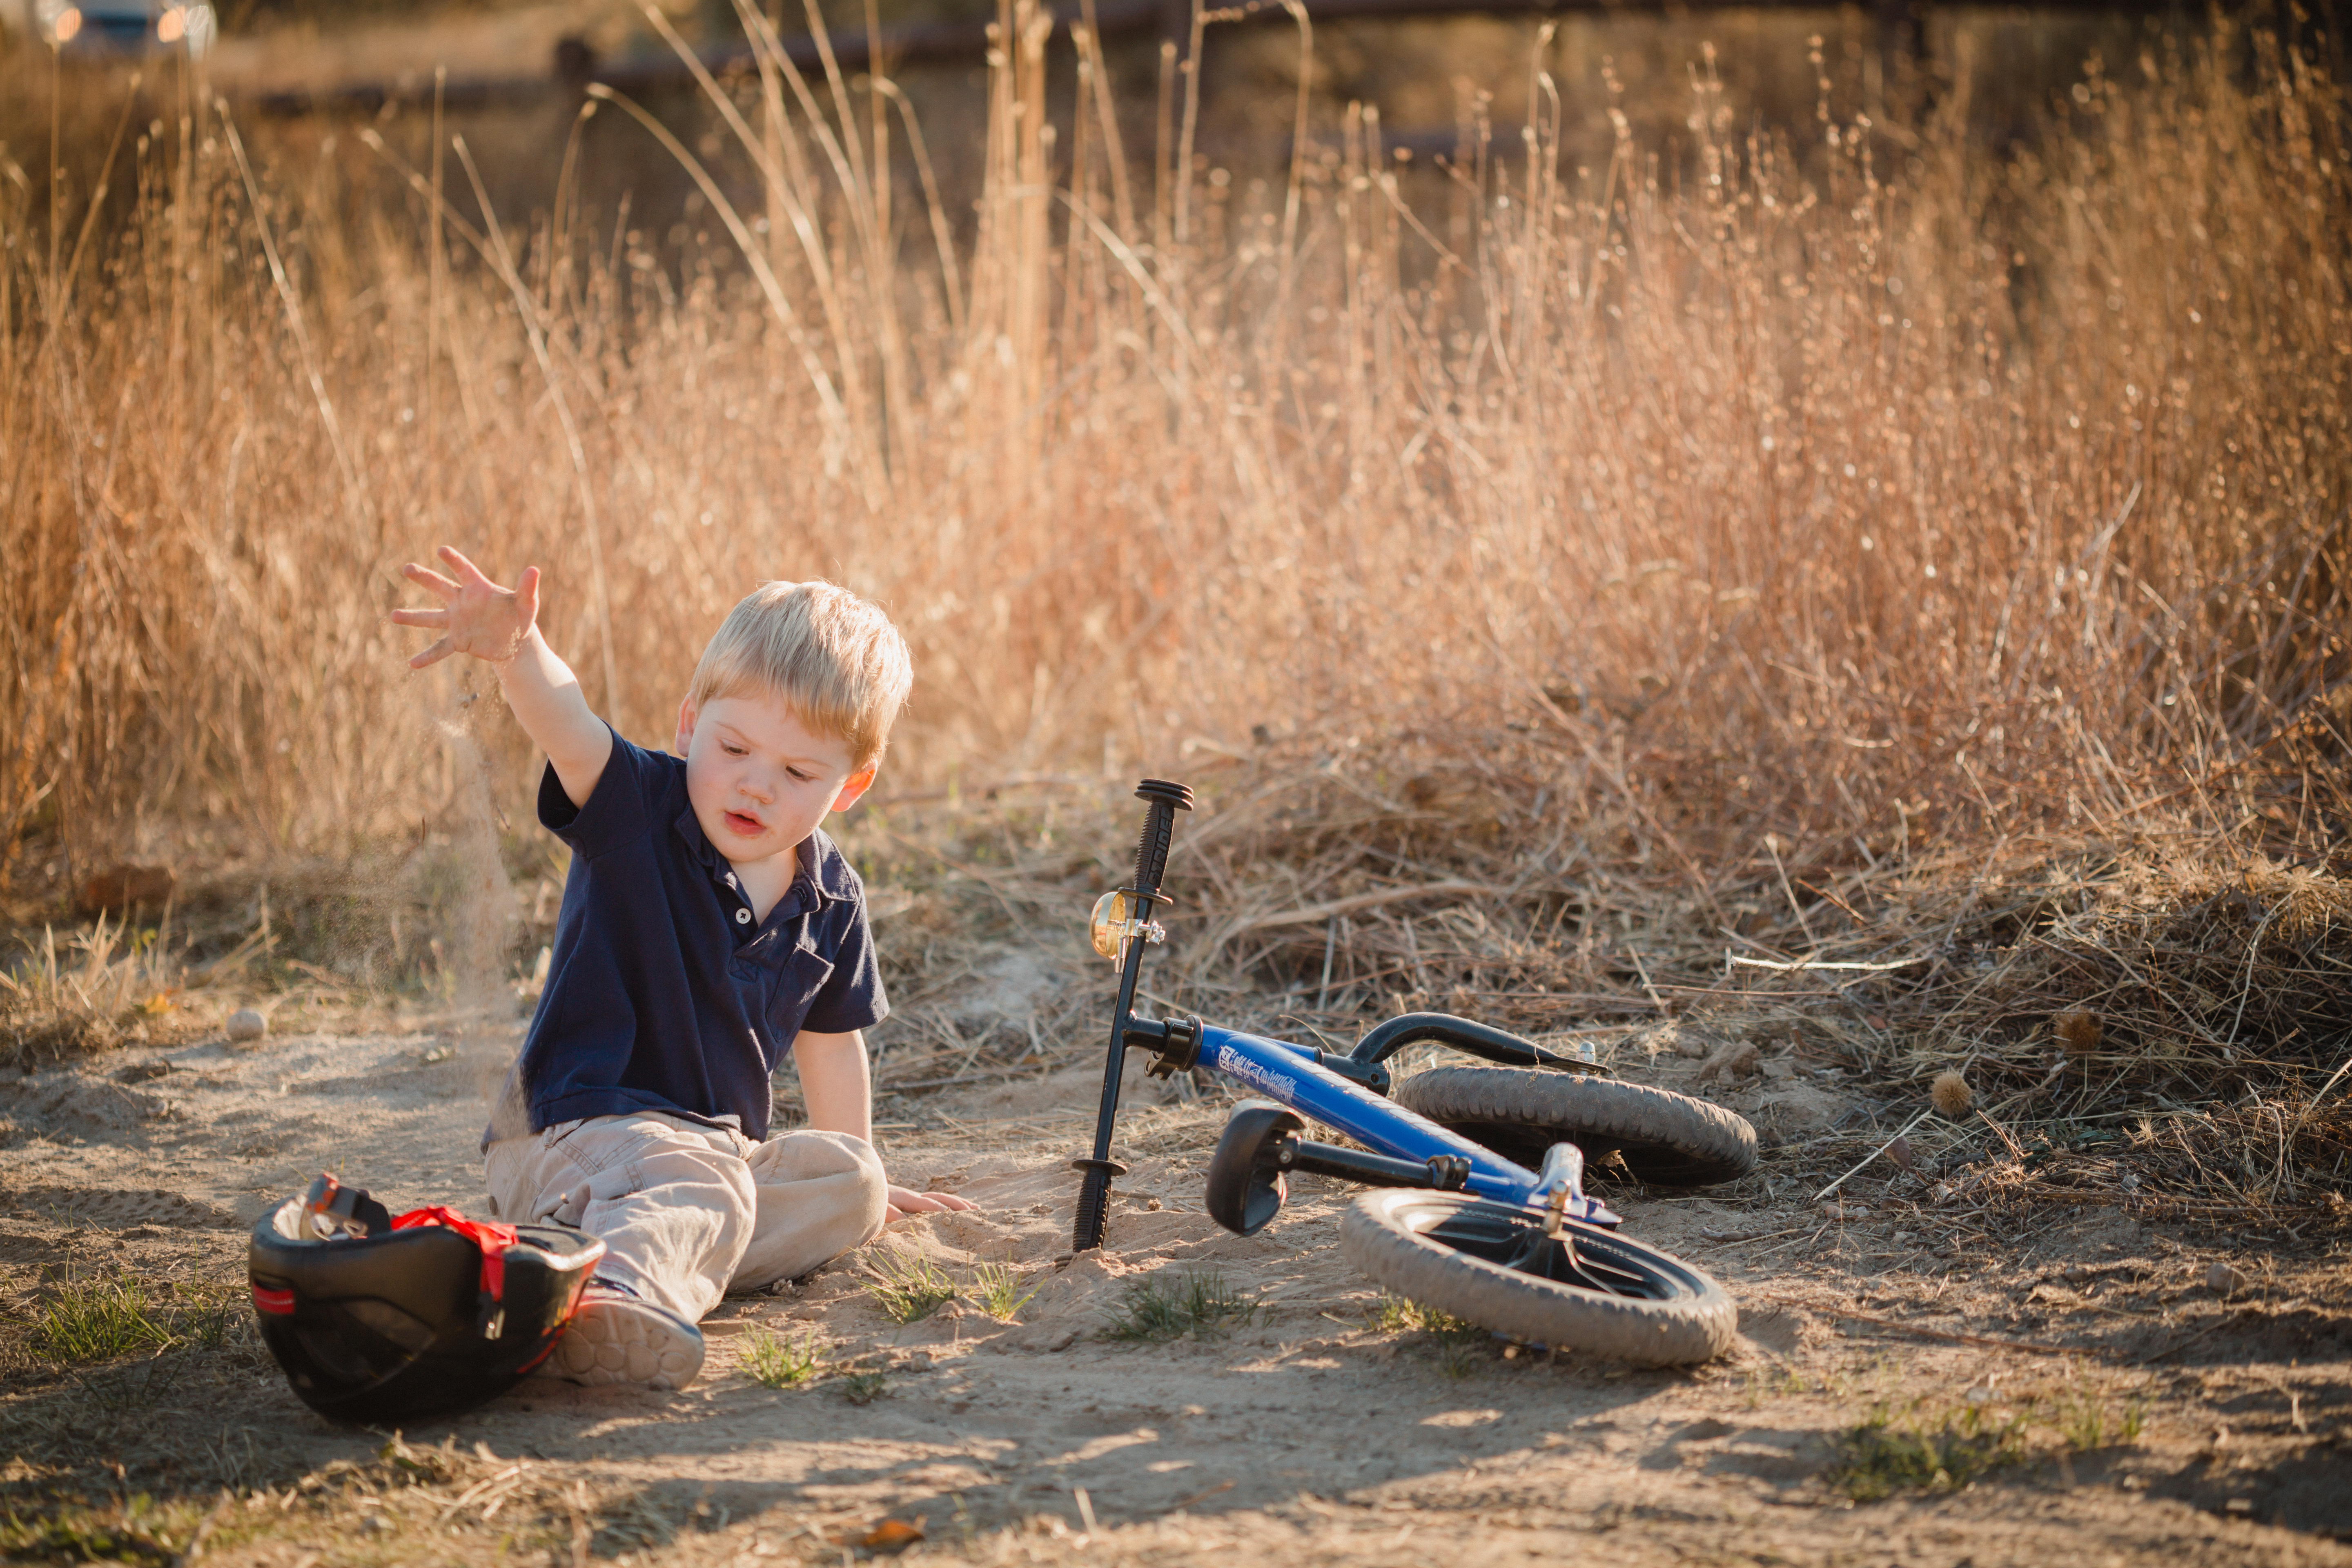 boy playing in dirt next to bike